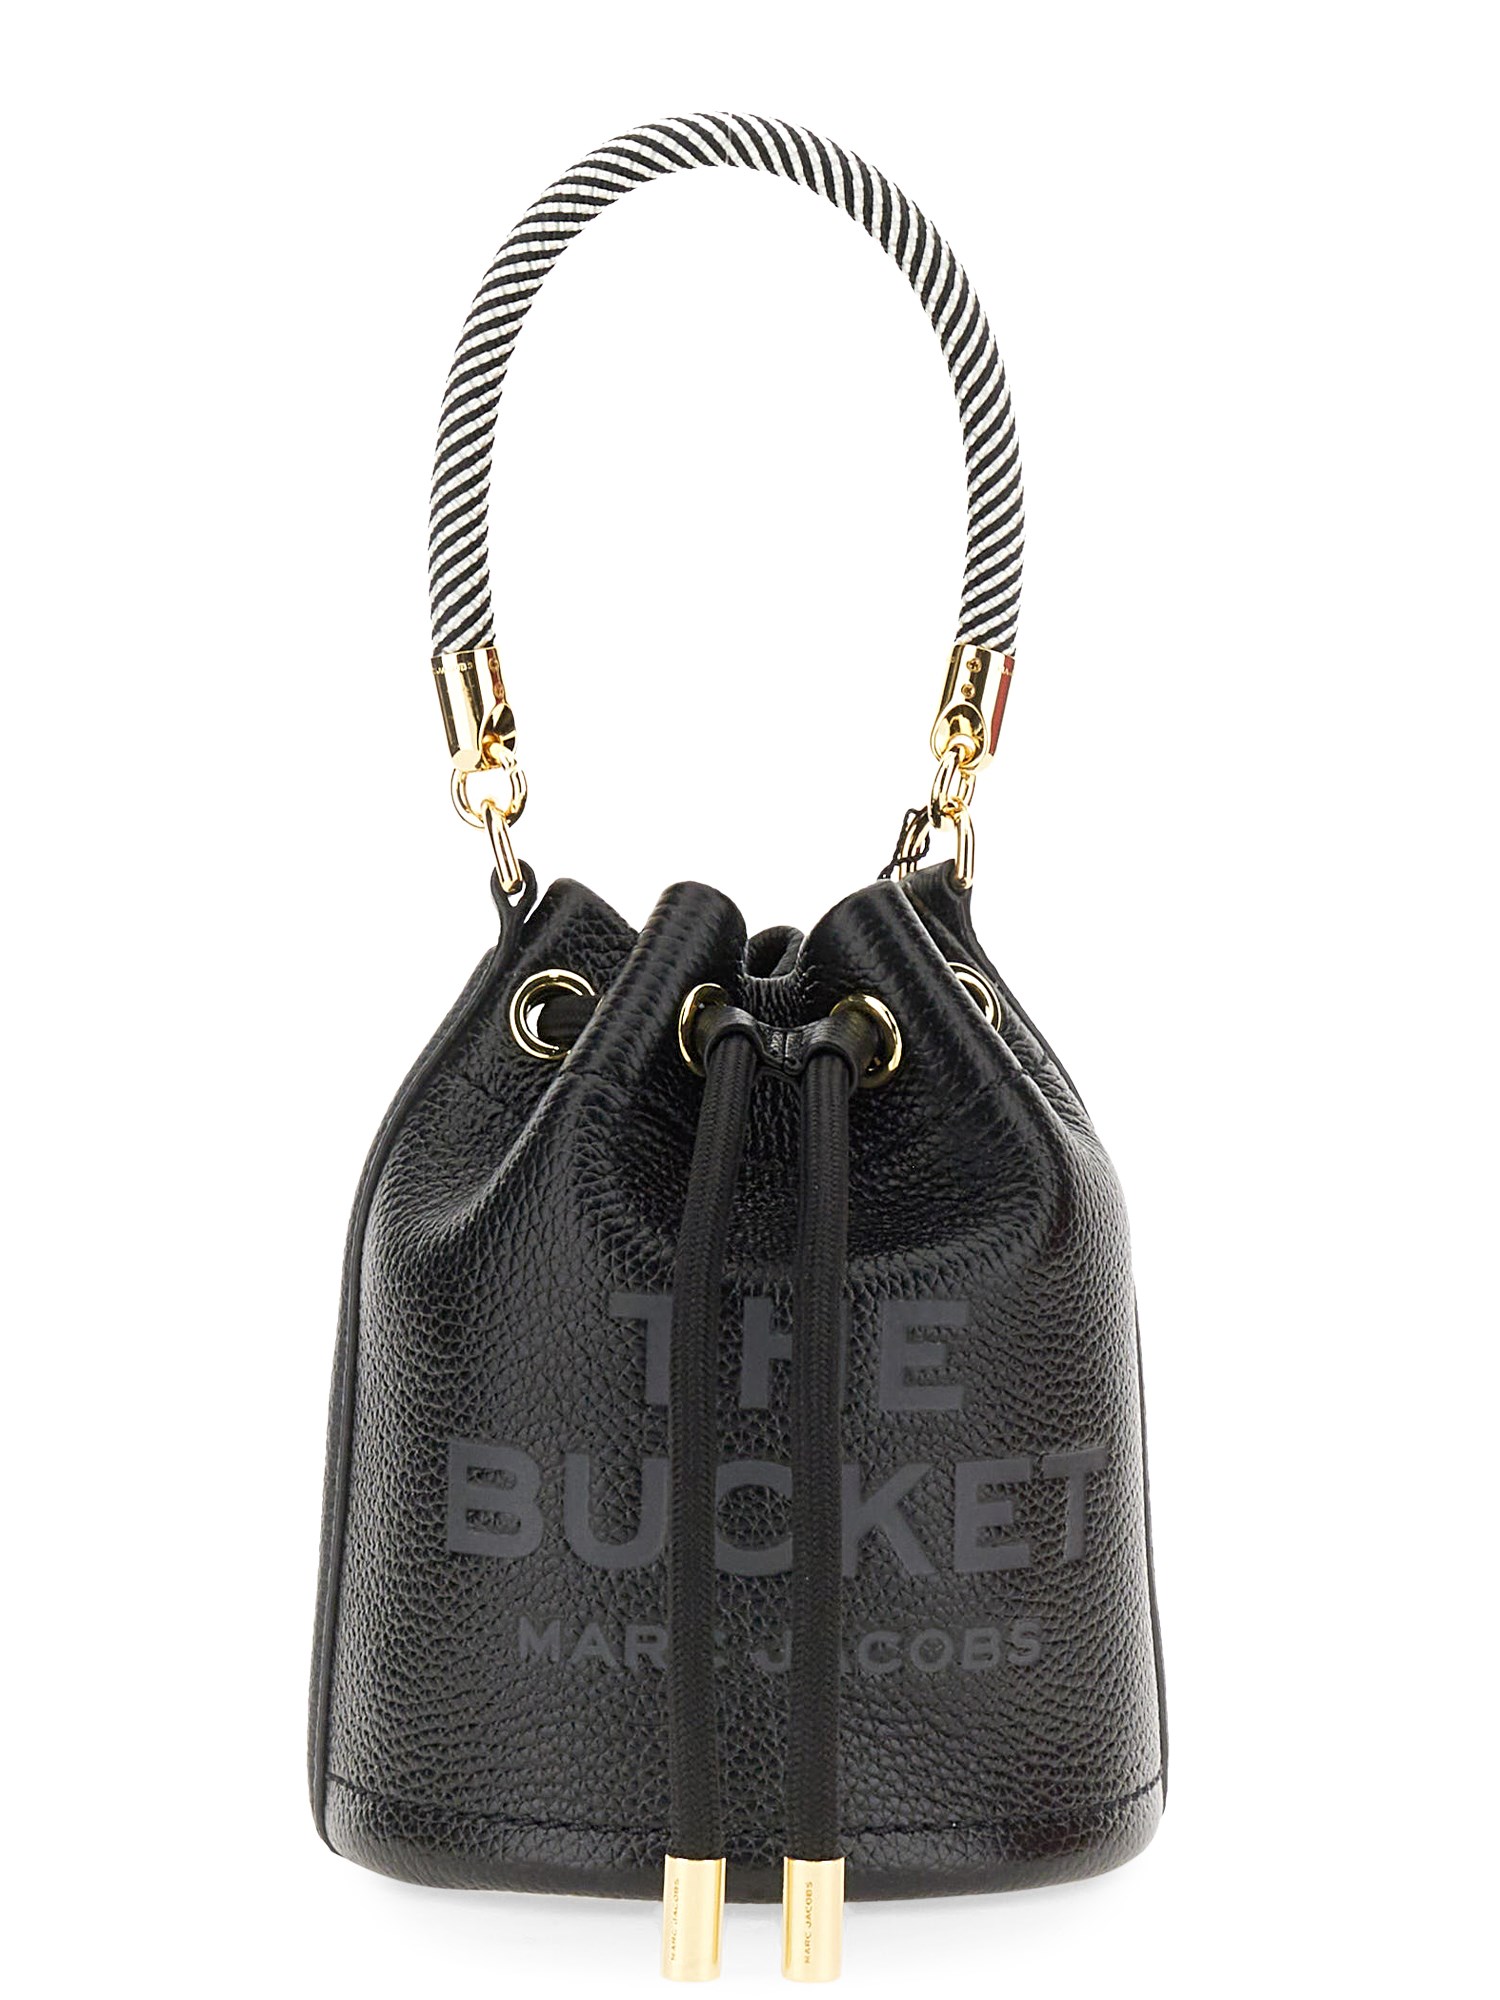 marc jacobs "the bucket" mini bag